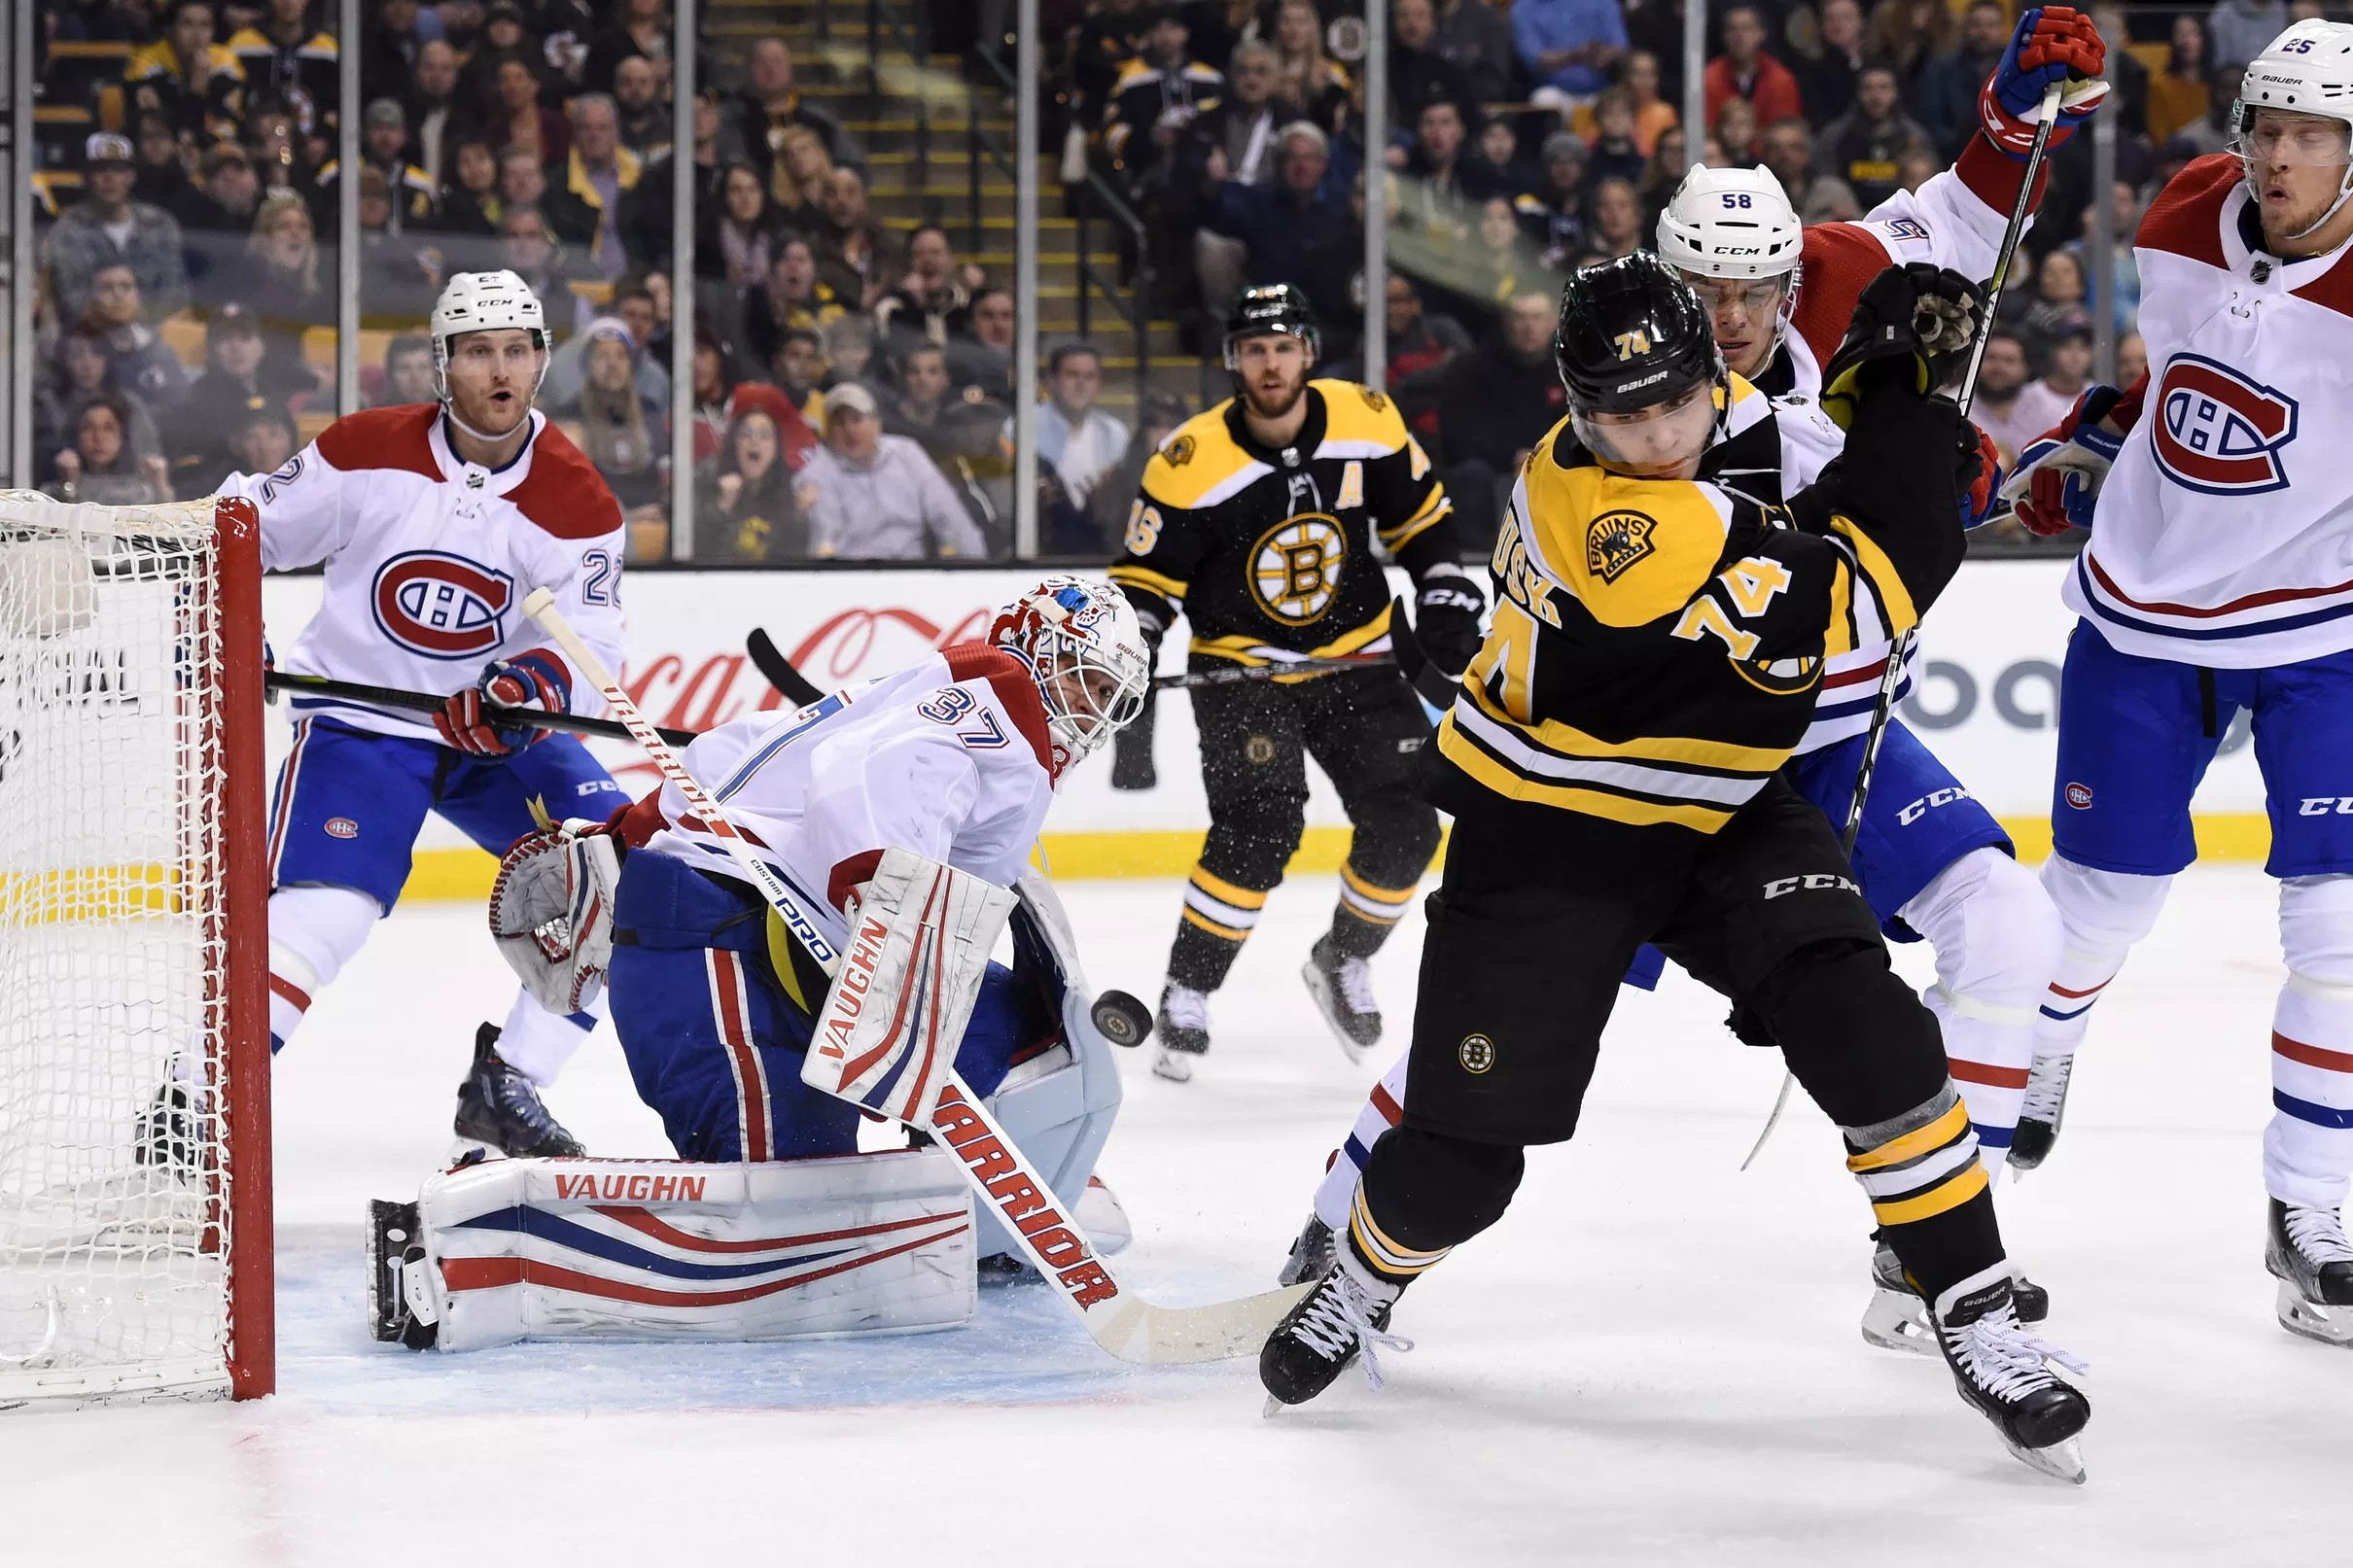 Bruins vs. Canadiens RECAP Bruins complete the season sweep! B’s win 2